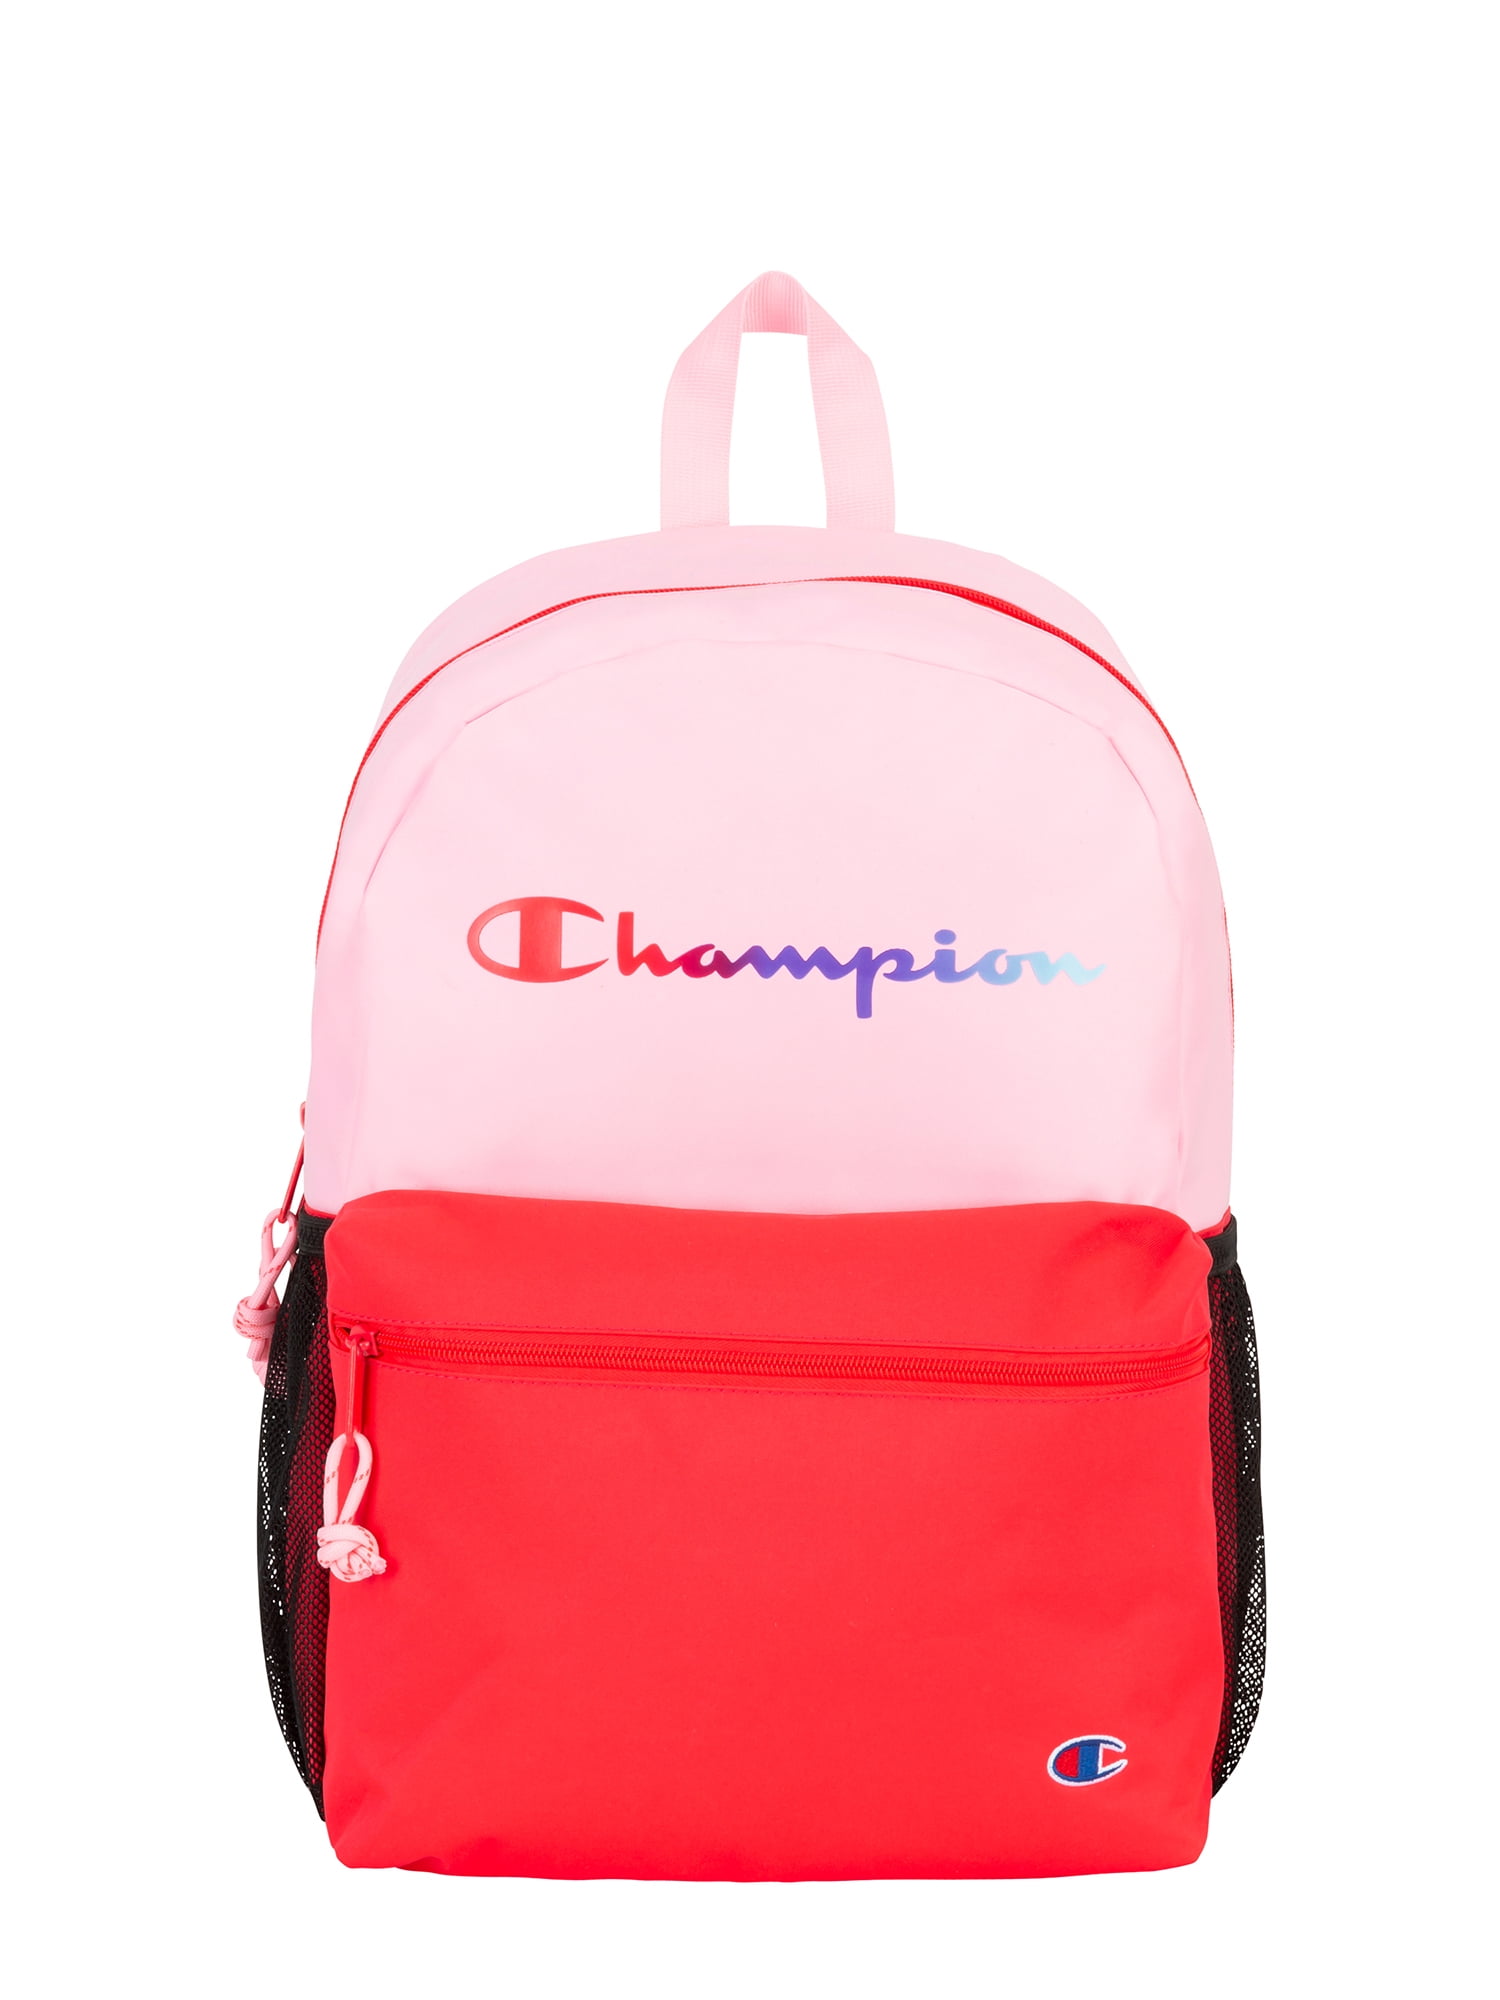 Champion Youthquake Backpack, Pink - Walmart.com